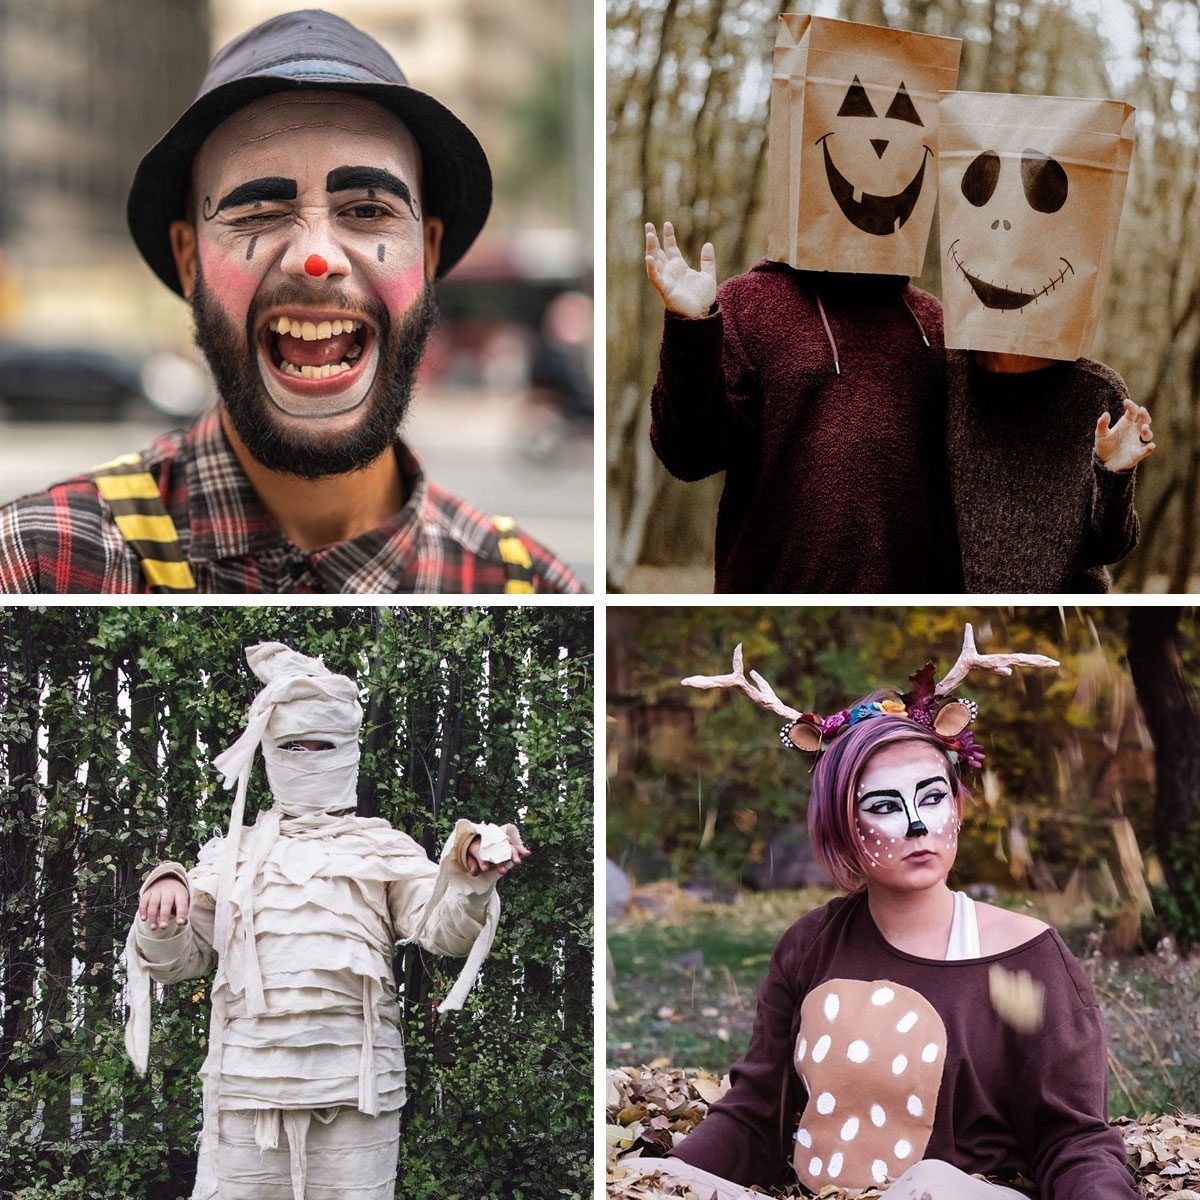 Best 'Mean Girls' Costume Ideas - DIY 'Mean Girls' Halloween Costumes